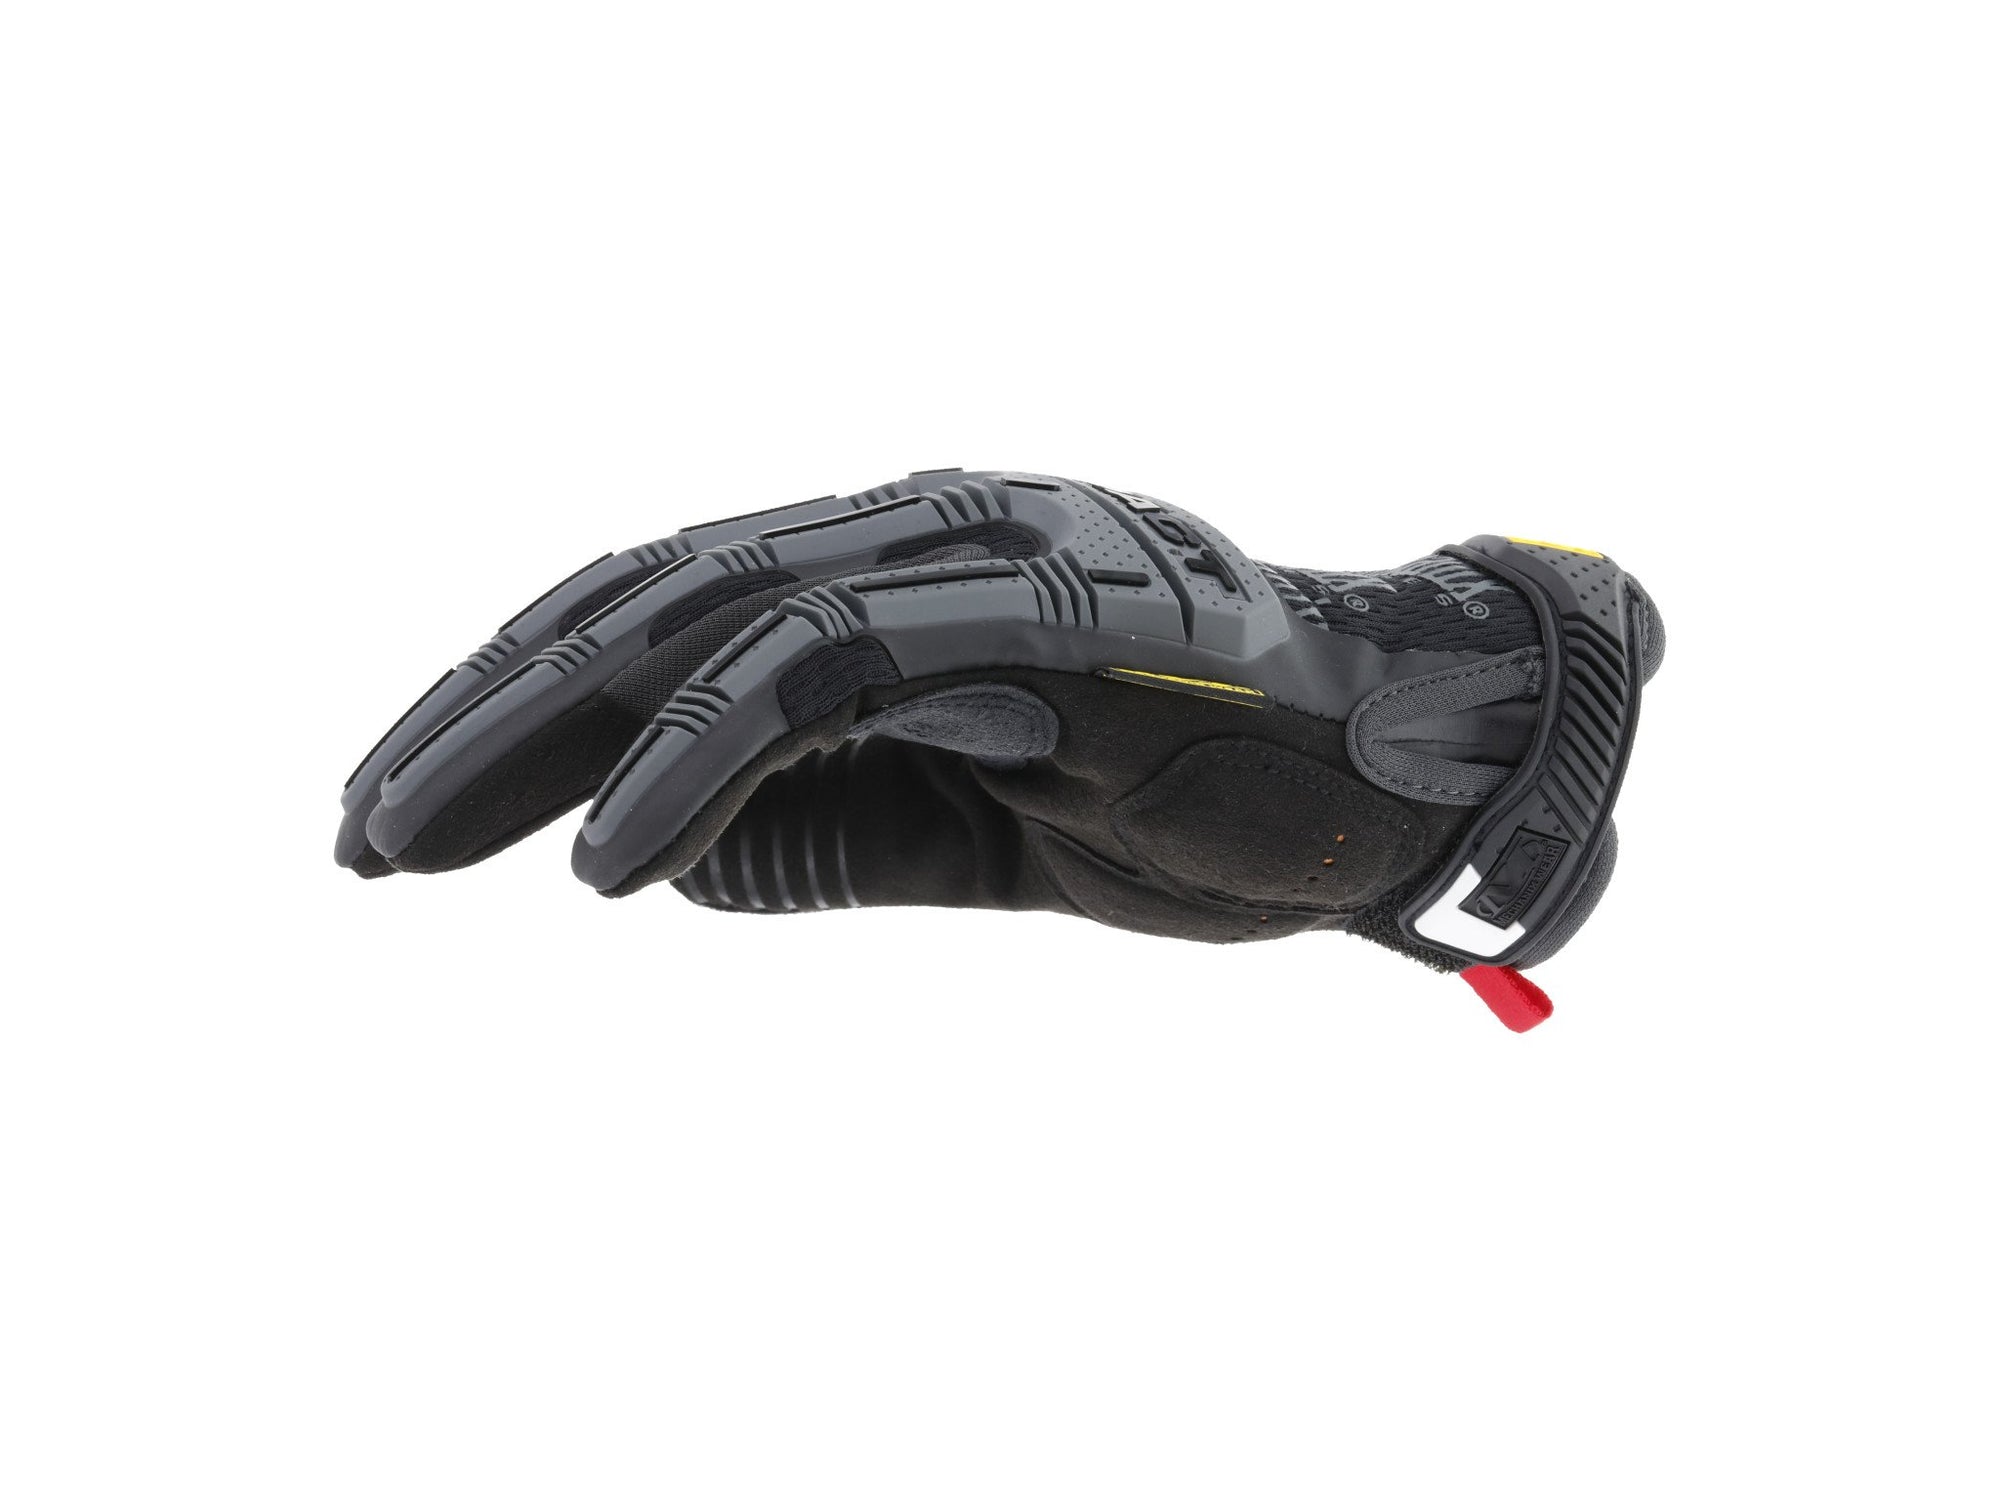 Mechanix Wear M-Pact Tactical Glove Black Tactical Gear Australia Supplier Mechanix Tactical Gear